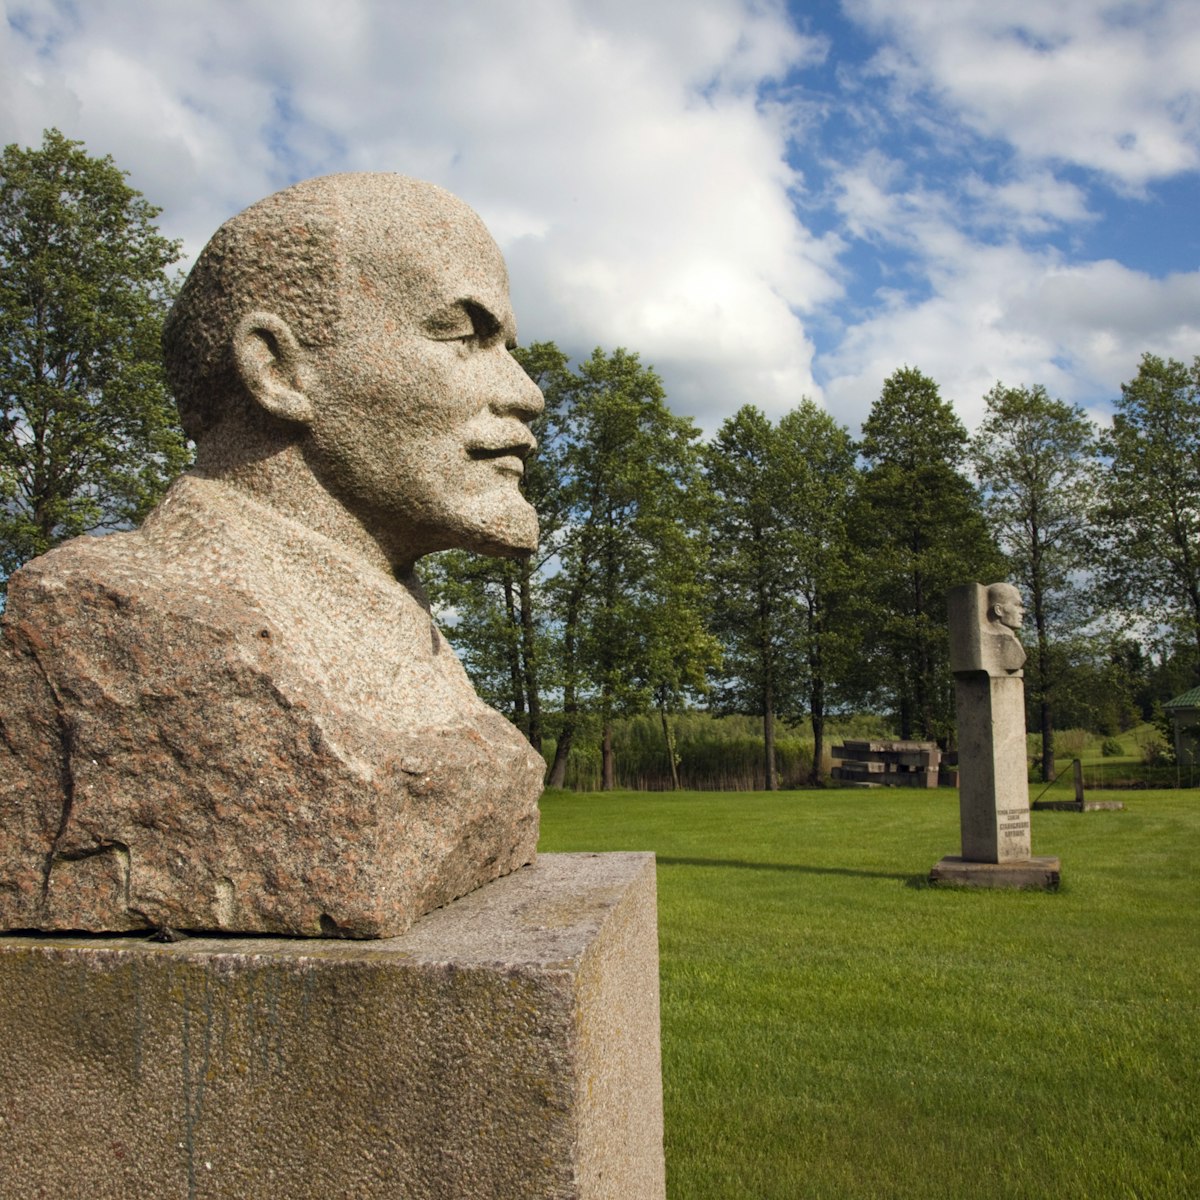 Bust of Vladimir Lenin, sculpture park of former Communist-era sculptures, Grutas Park, Grutas, Lithuania